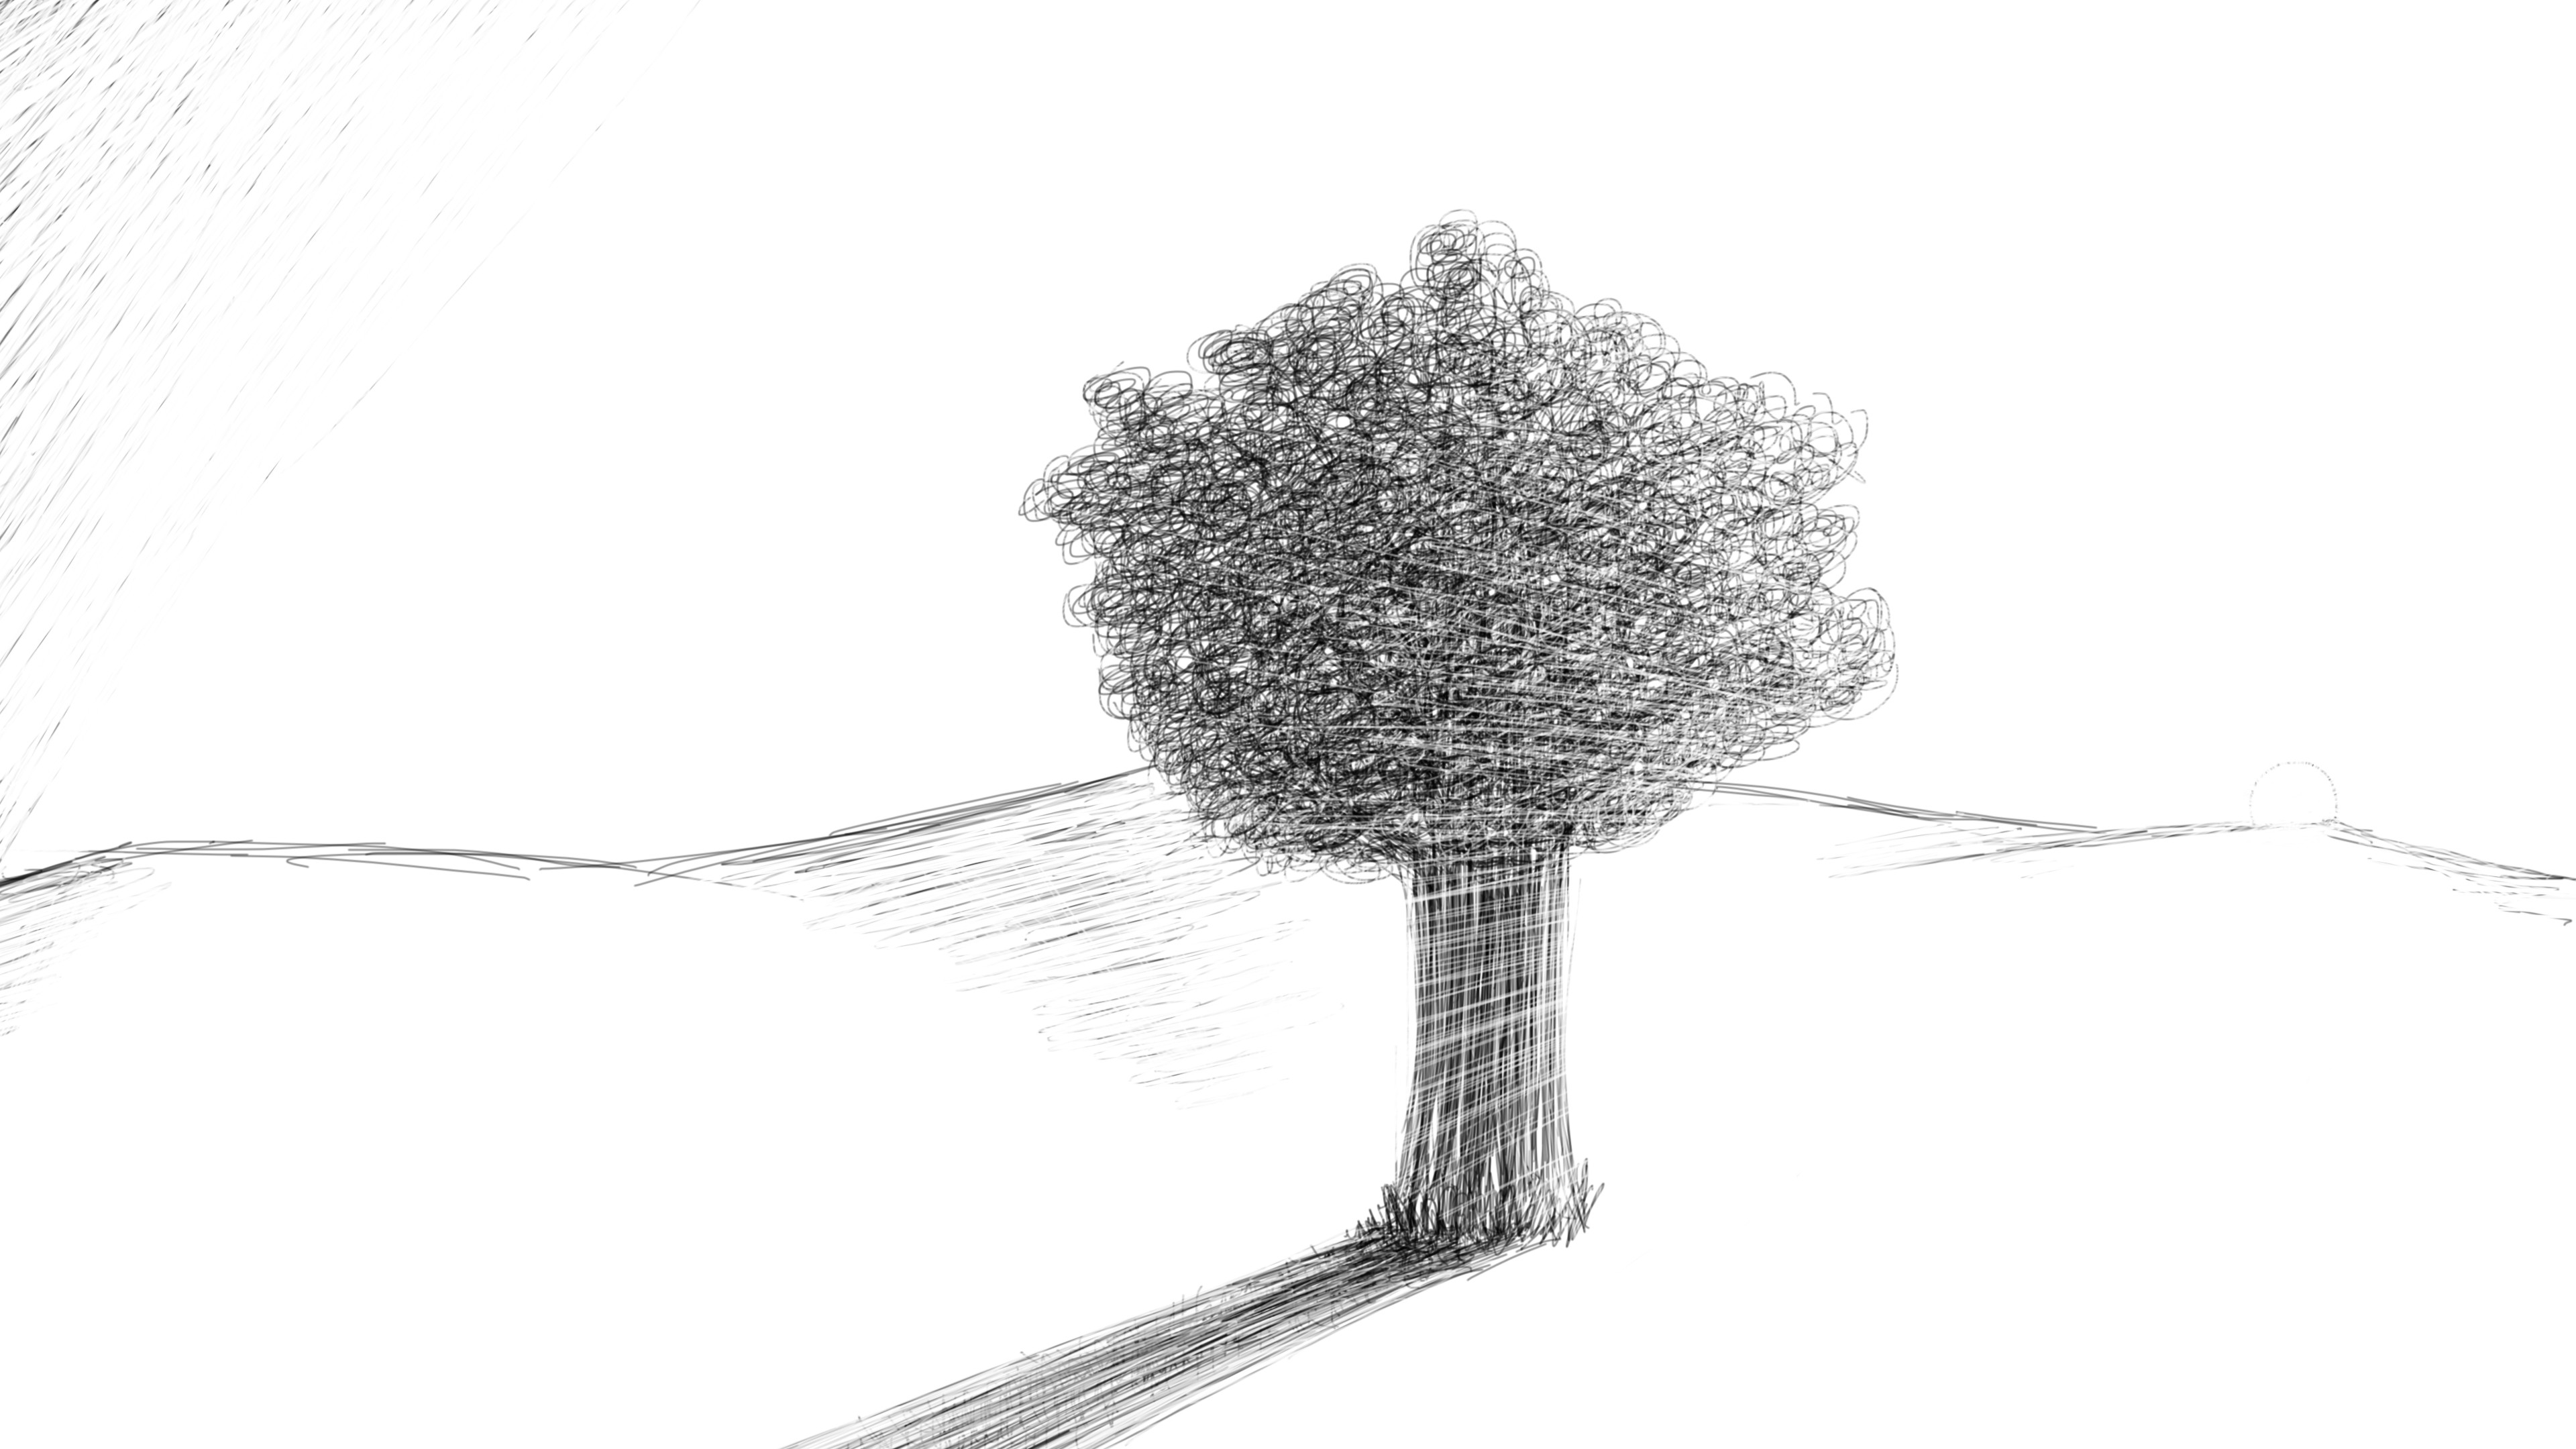 General 3840x2160 trees pencils sketches artwork minimalism landscape digital art simple background